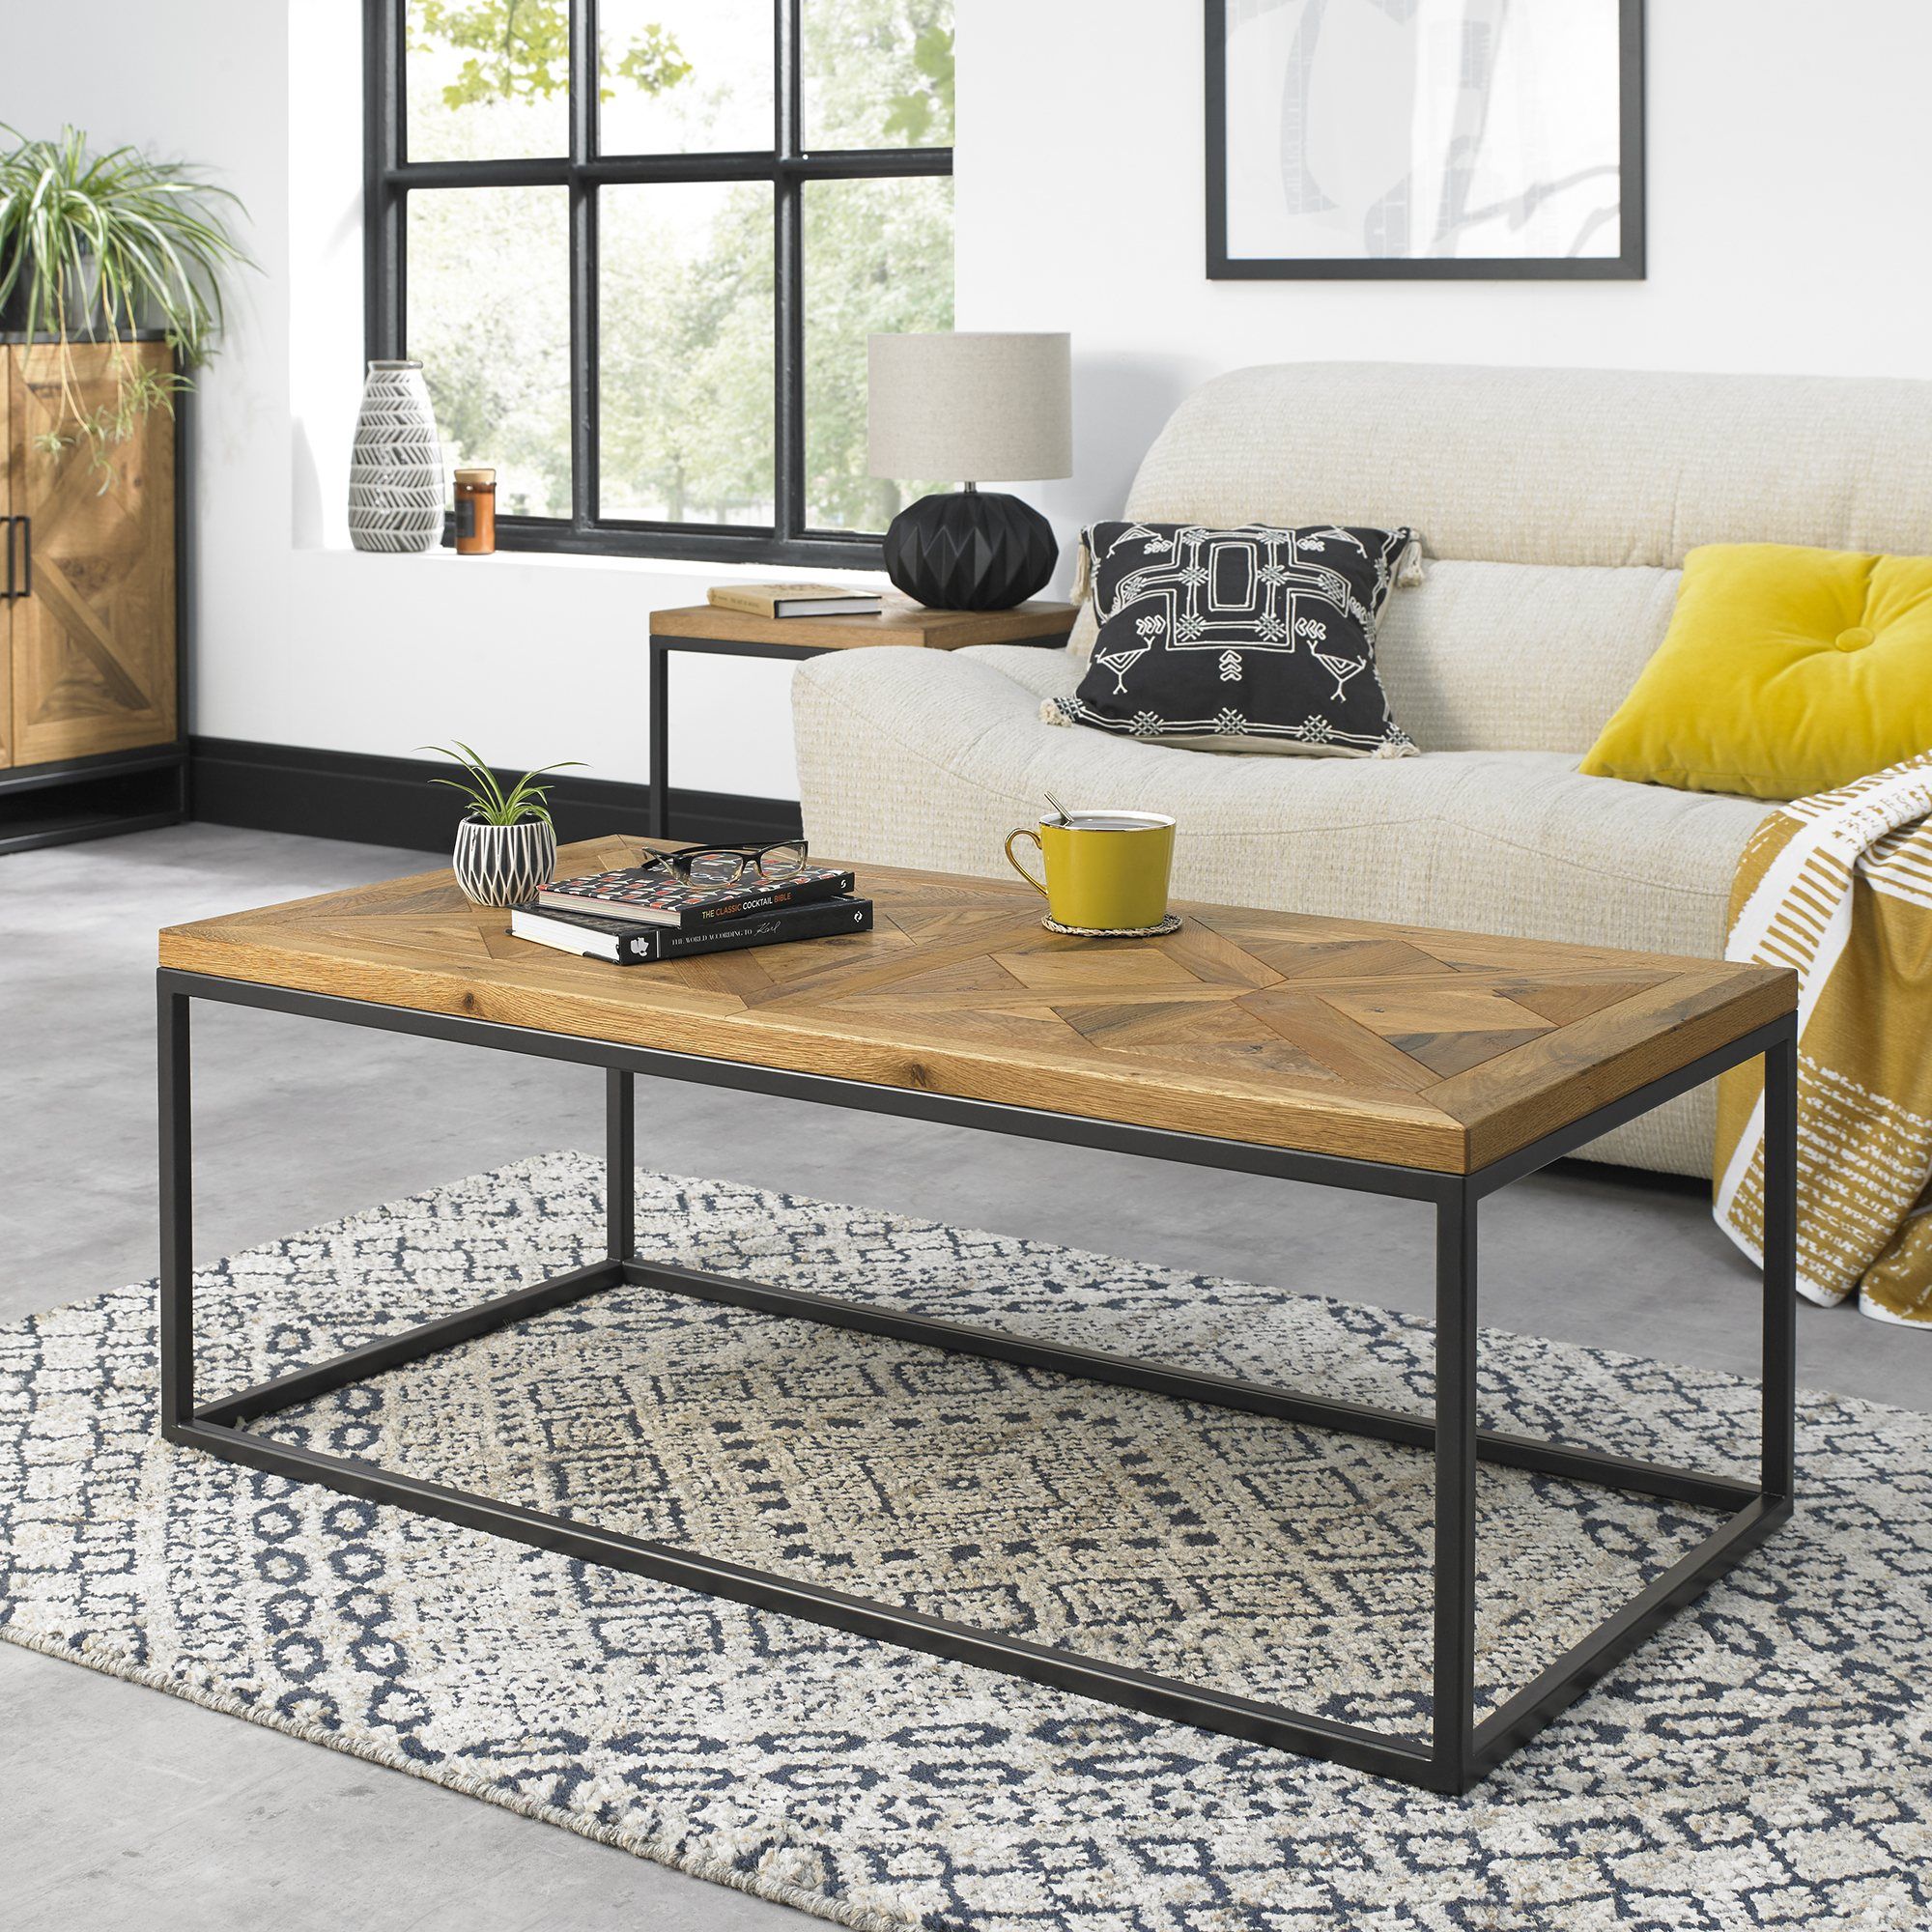 Indus Rustic Oak Coffee Table | Living Room Furniture – Bentley Designs Within Rustic Wood Coffee Tables (Gallery 15 of 21)